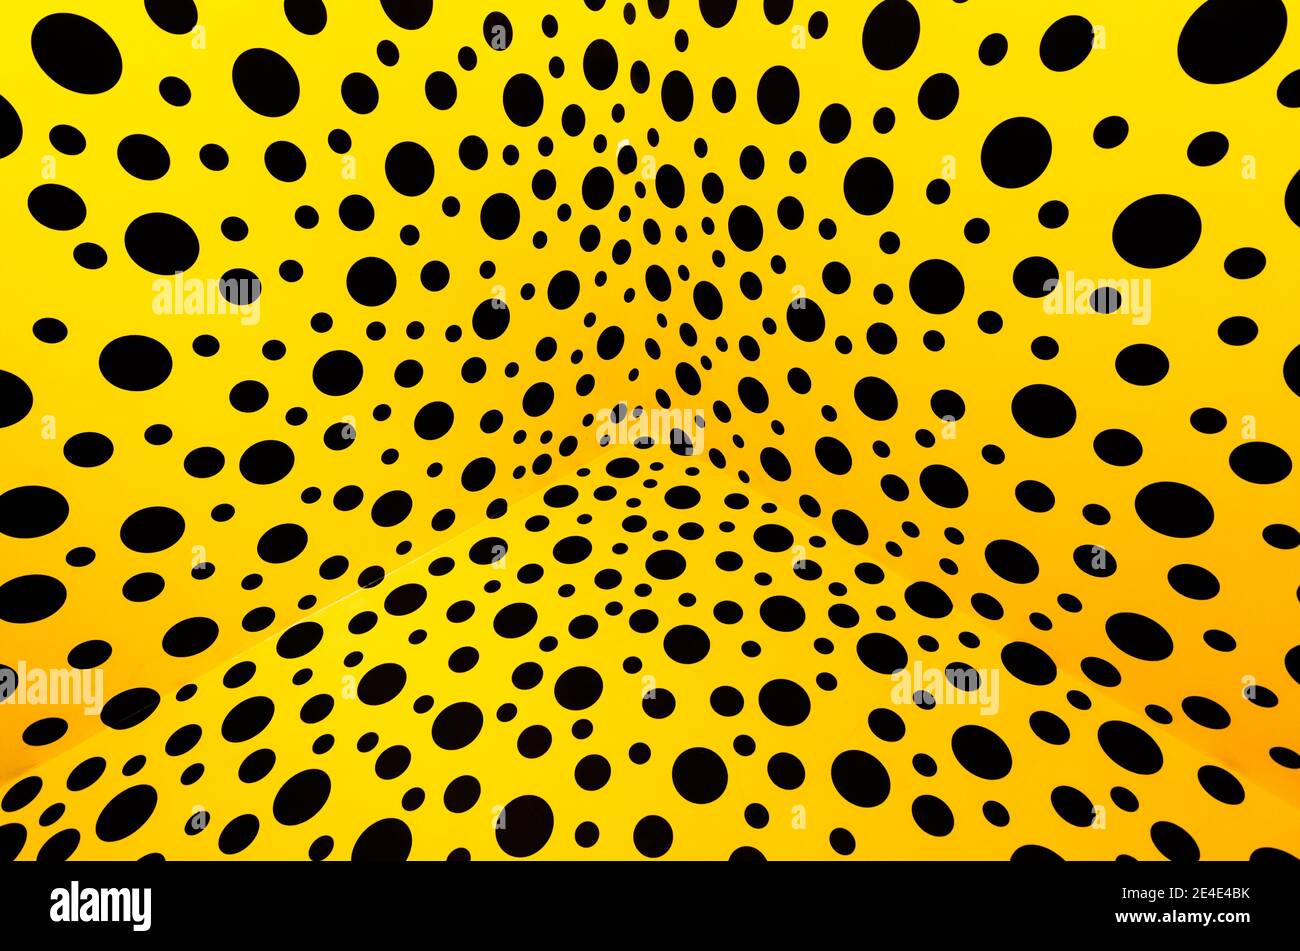 An infinity mirror room full yellow and black polka dots